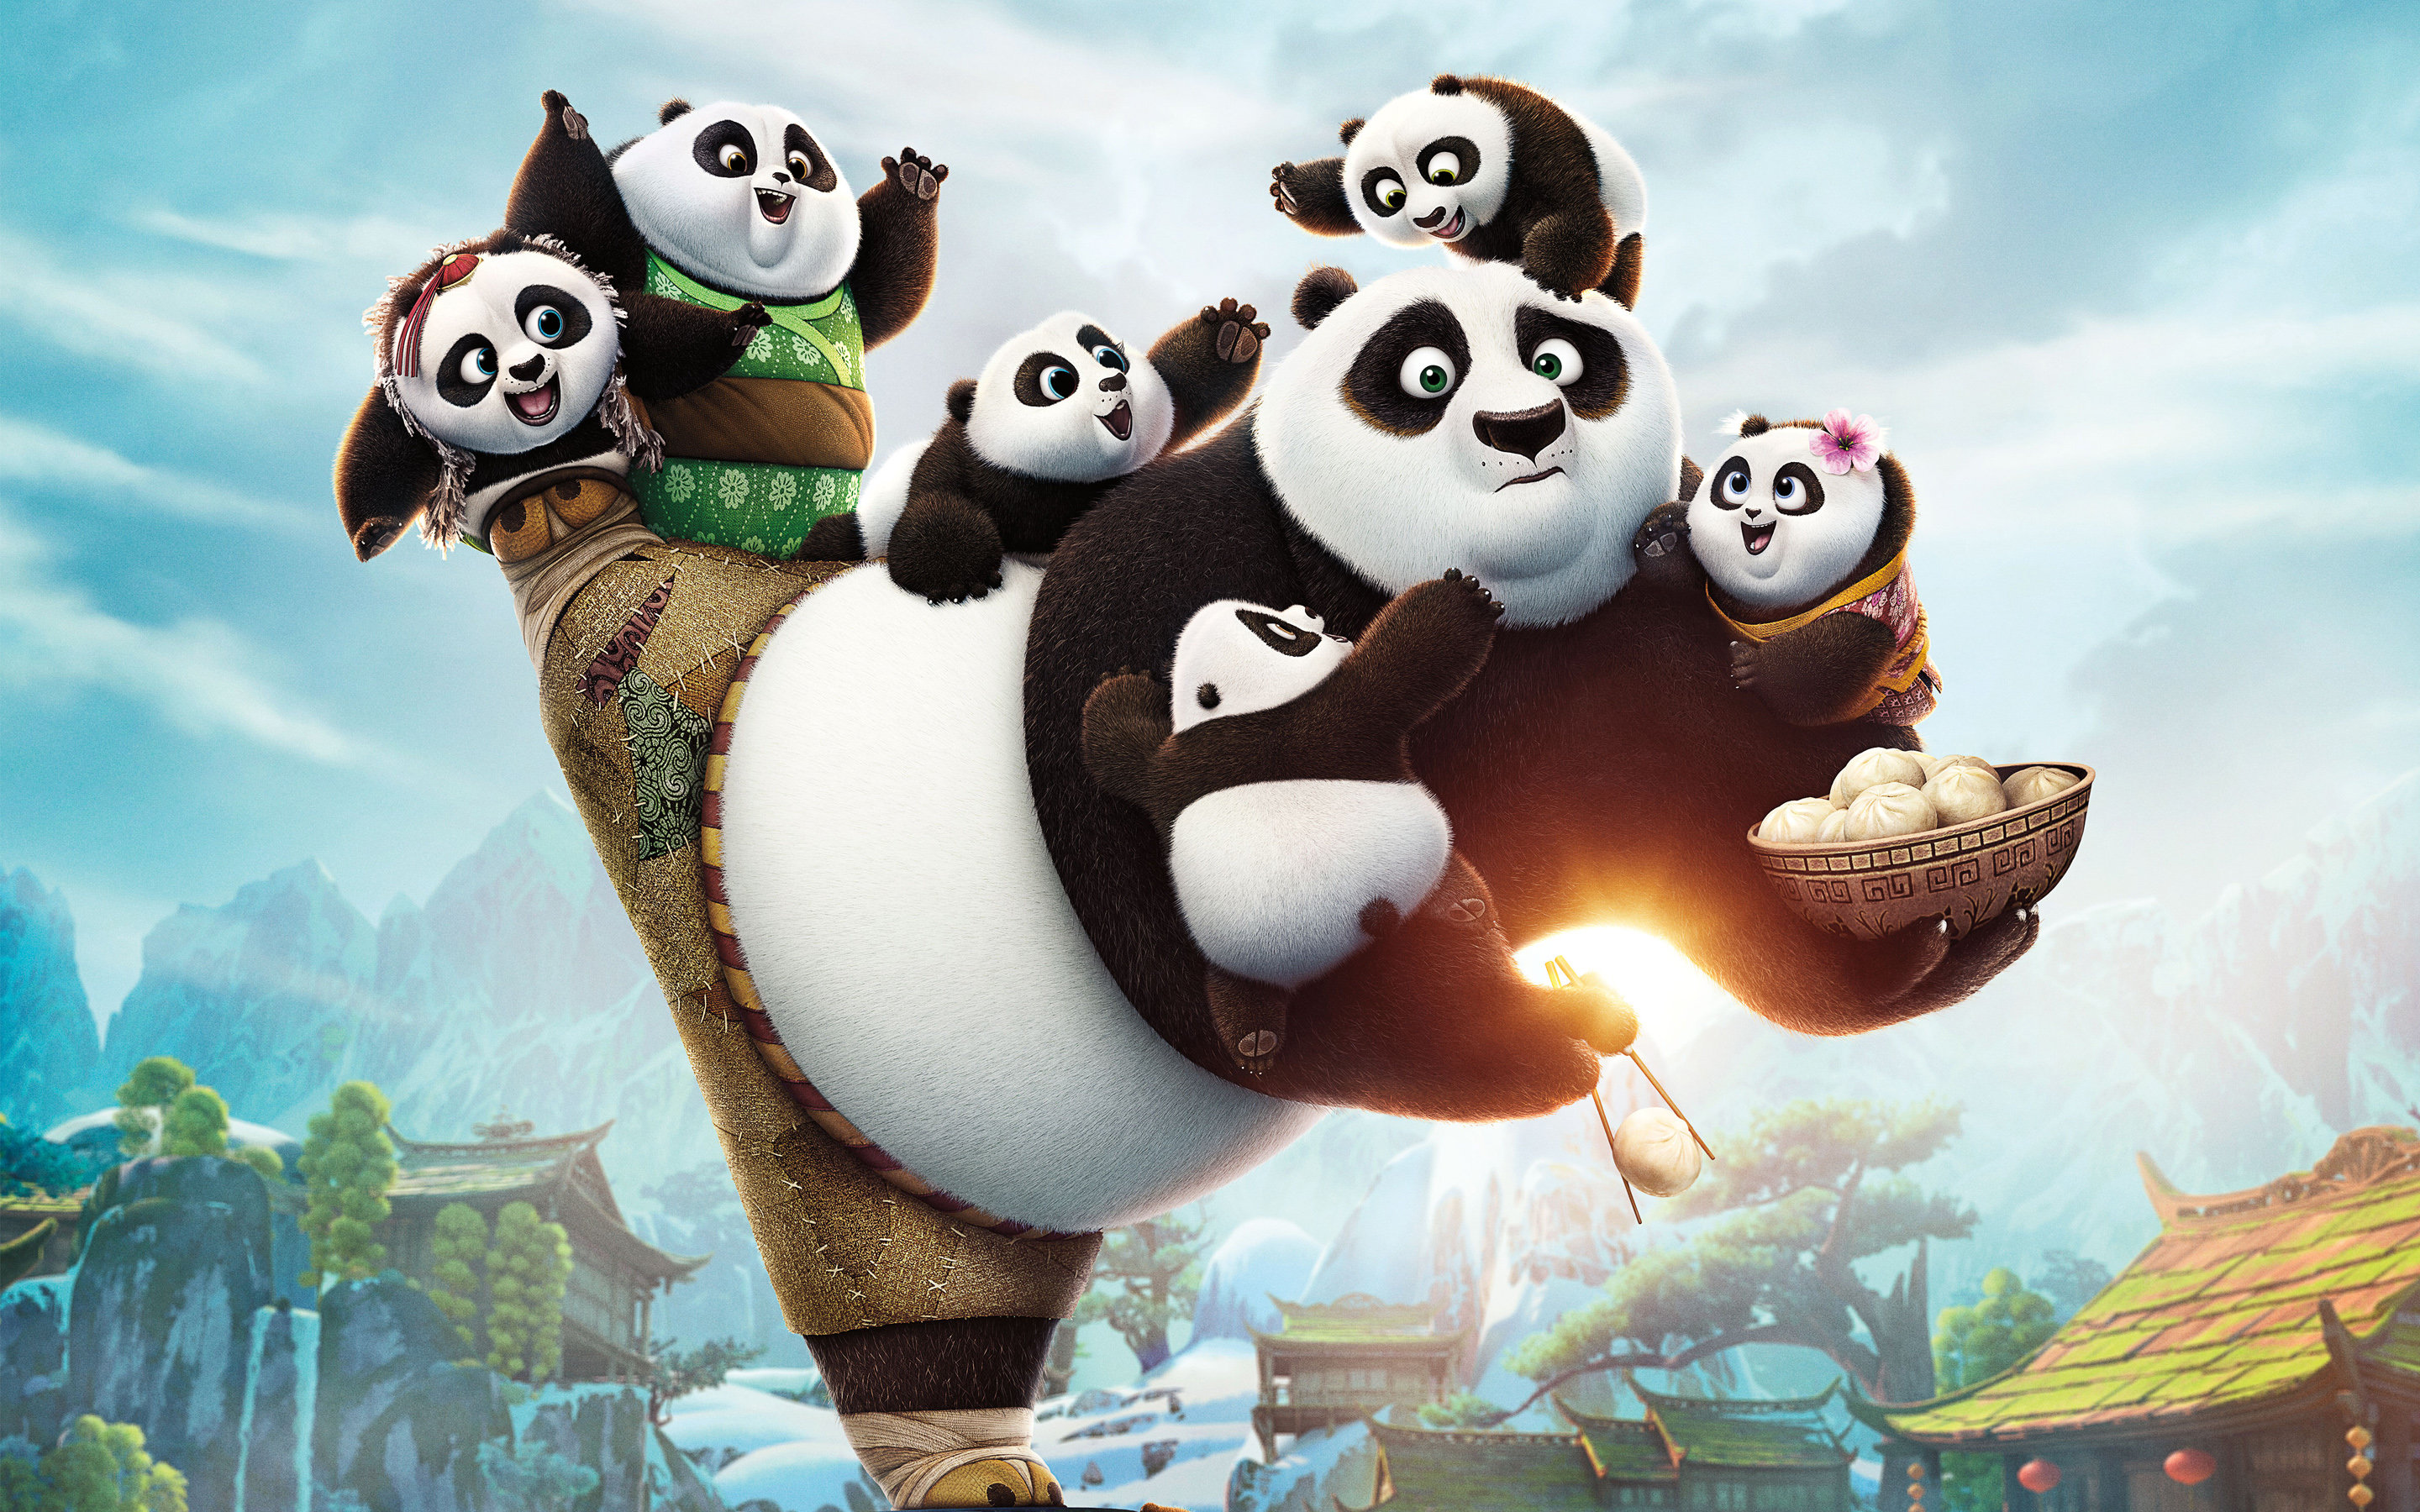 Best Kung Fu Panda 3 wallpaper ID:209021 for High Resolution hd 2880x1800 computer